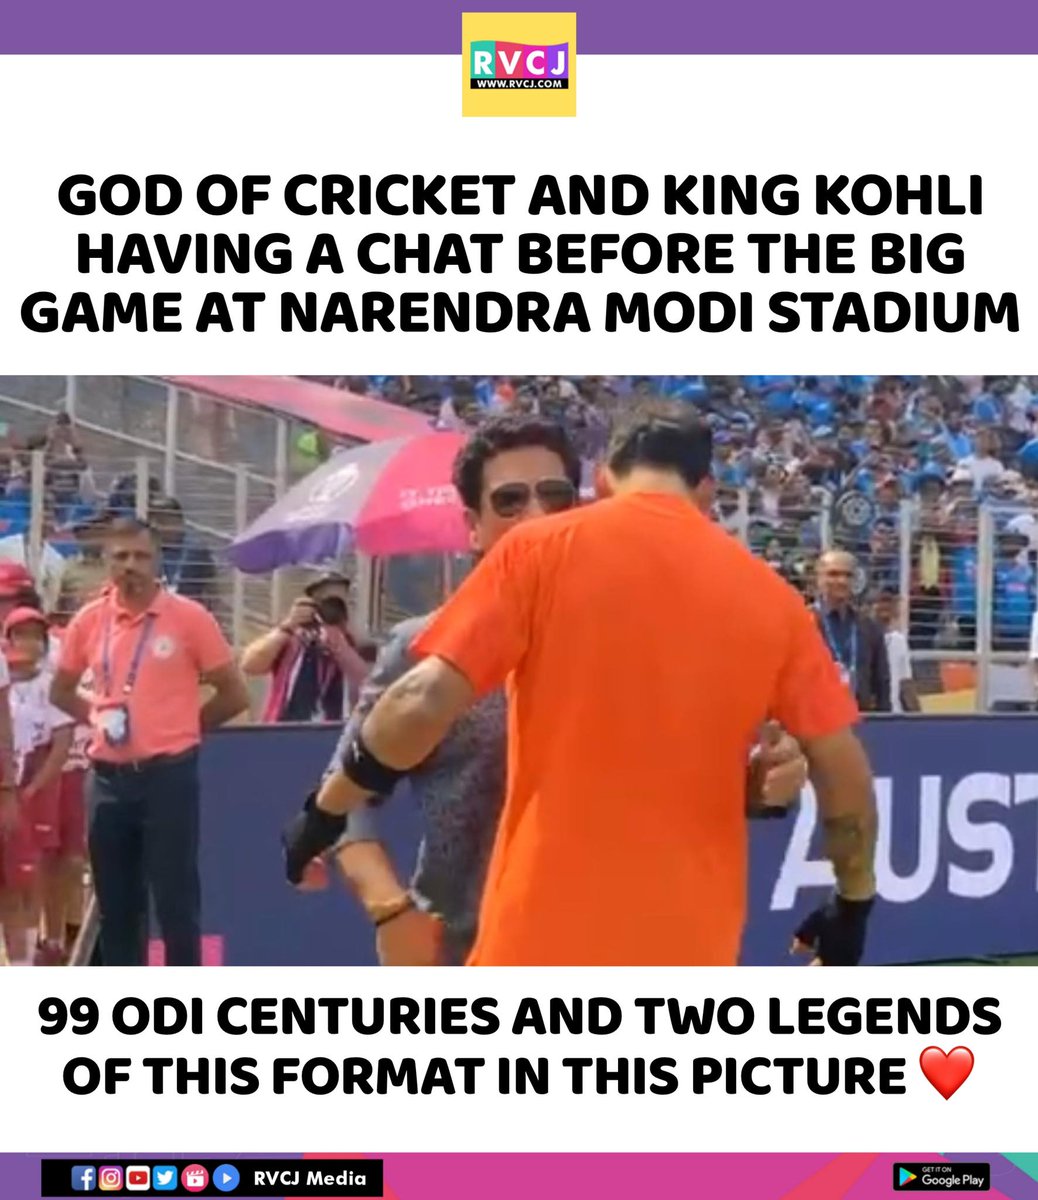 God of cricket
#god #godofcricket #sachintendulkar